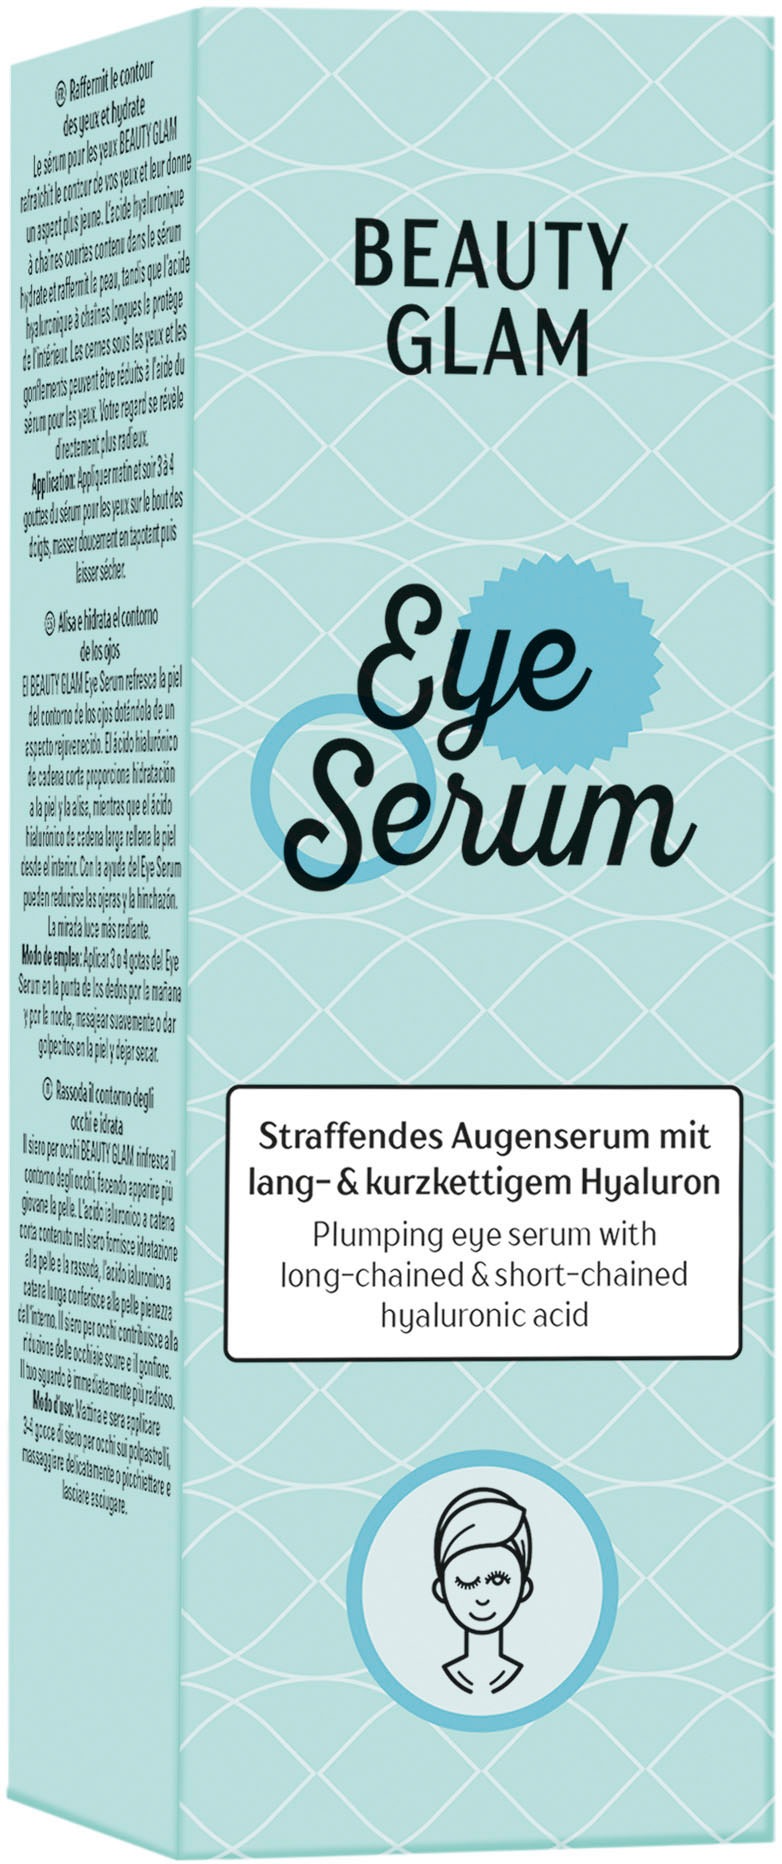 BEAUTY GLAM Augenserum »Beauty Glam Eye Serum«